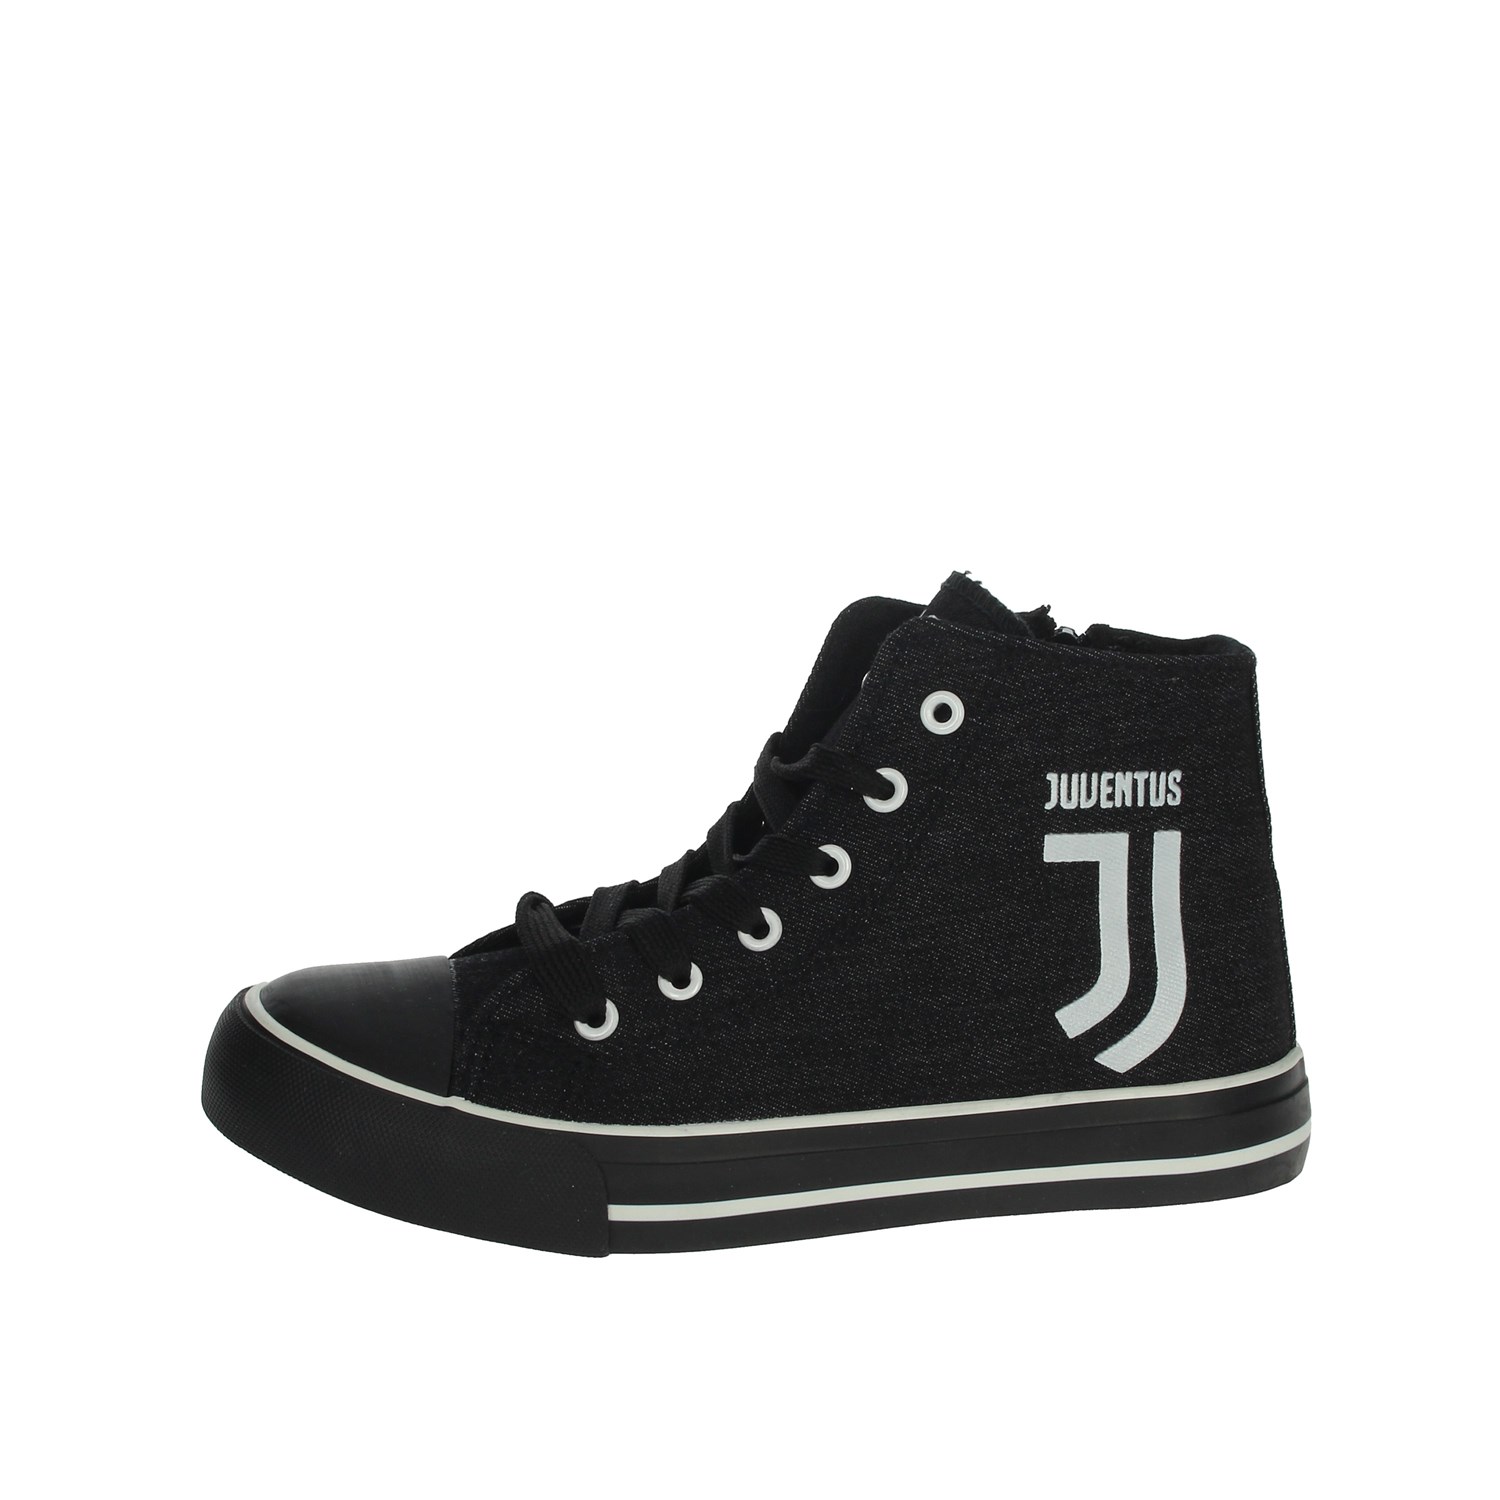 Sneakers Juventus Bambino - NERO - Vendita Sneakers On line su  Shoespoint.biz